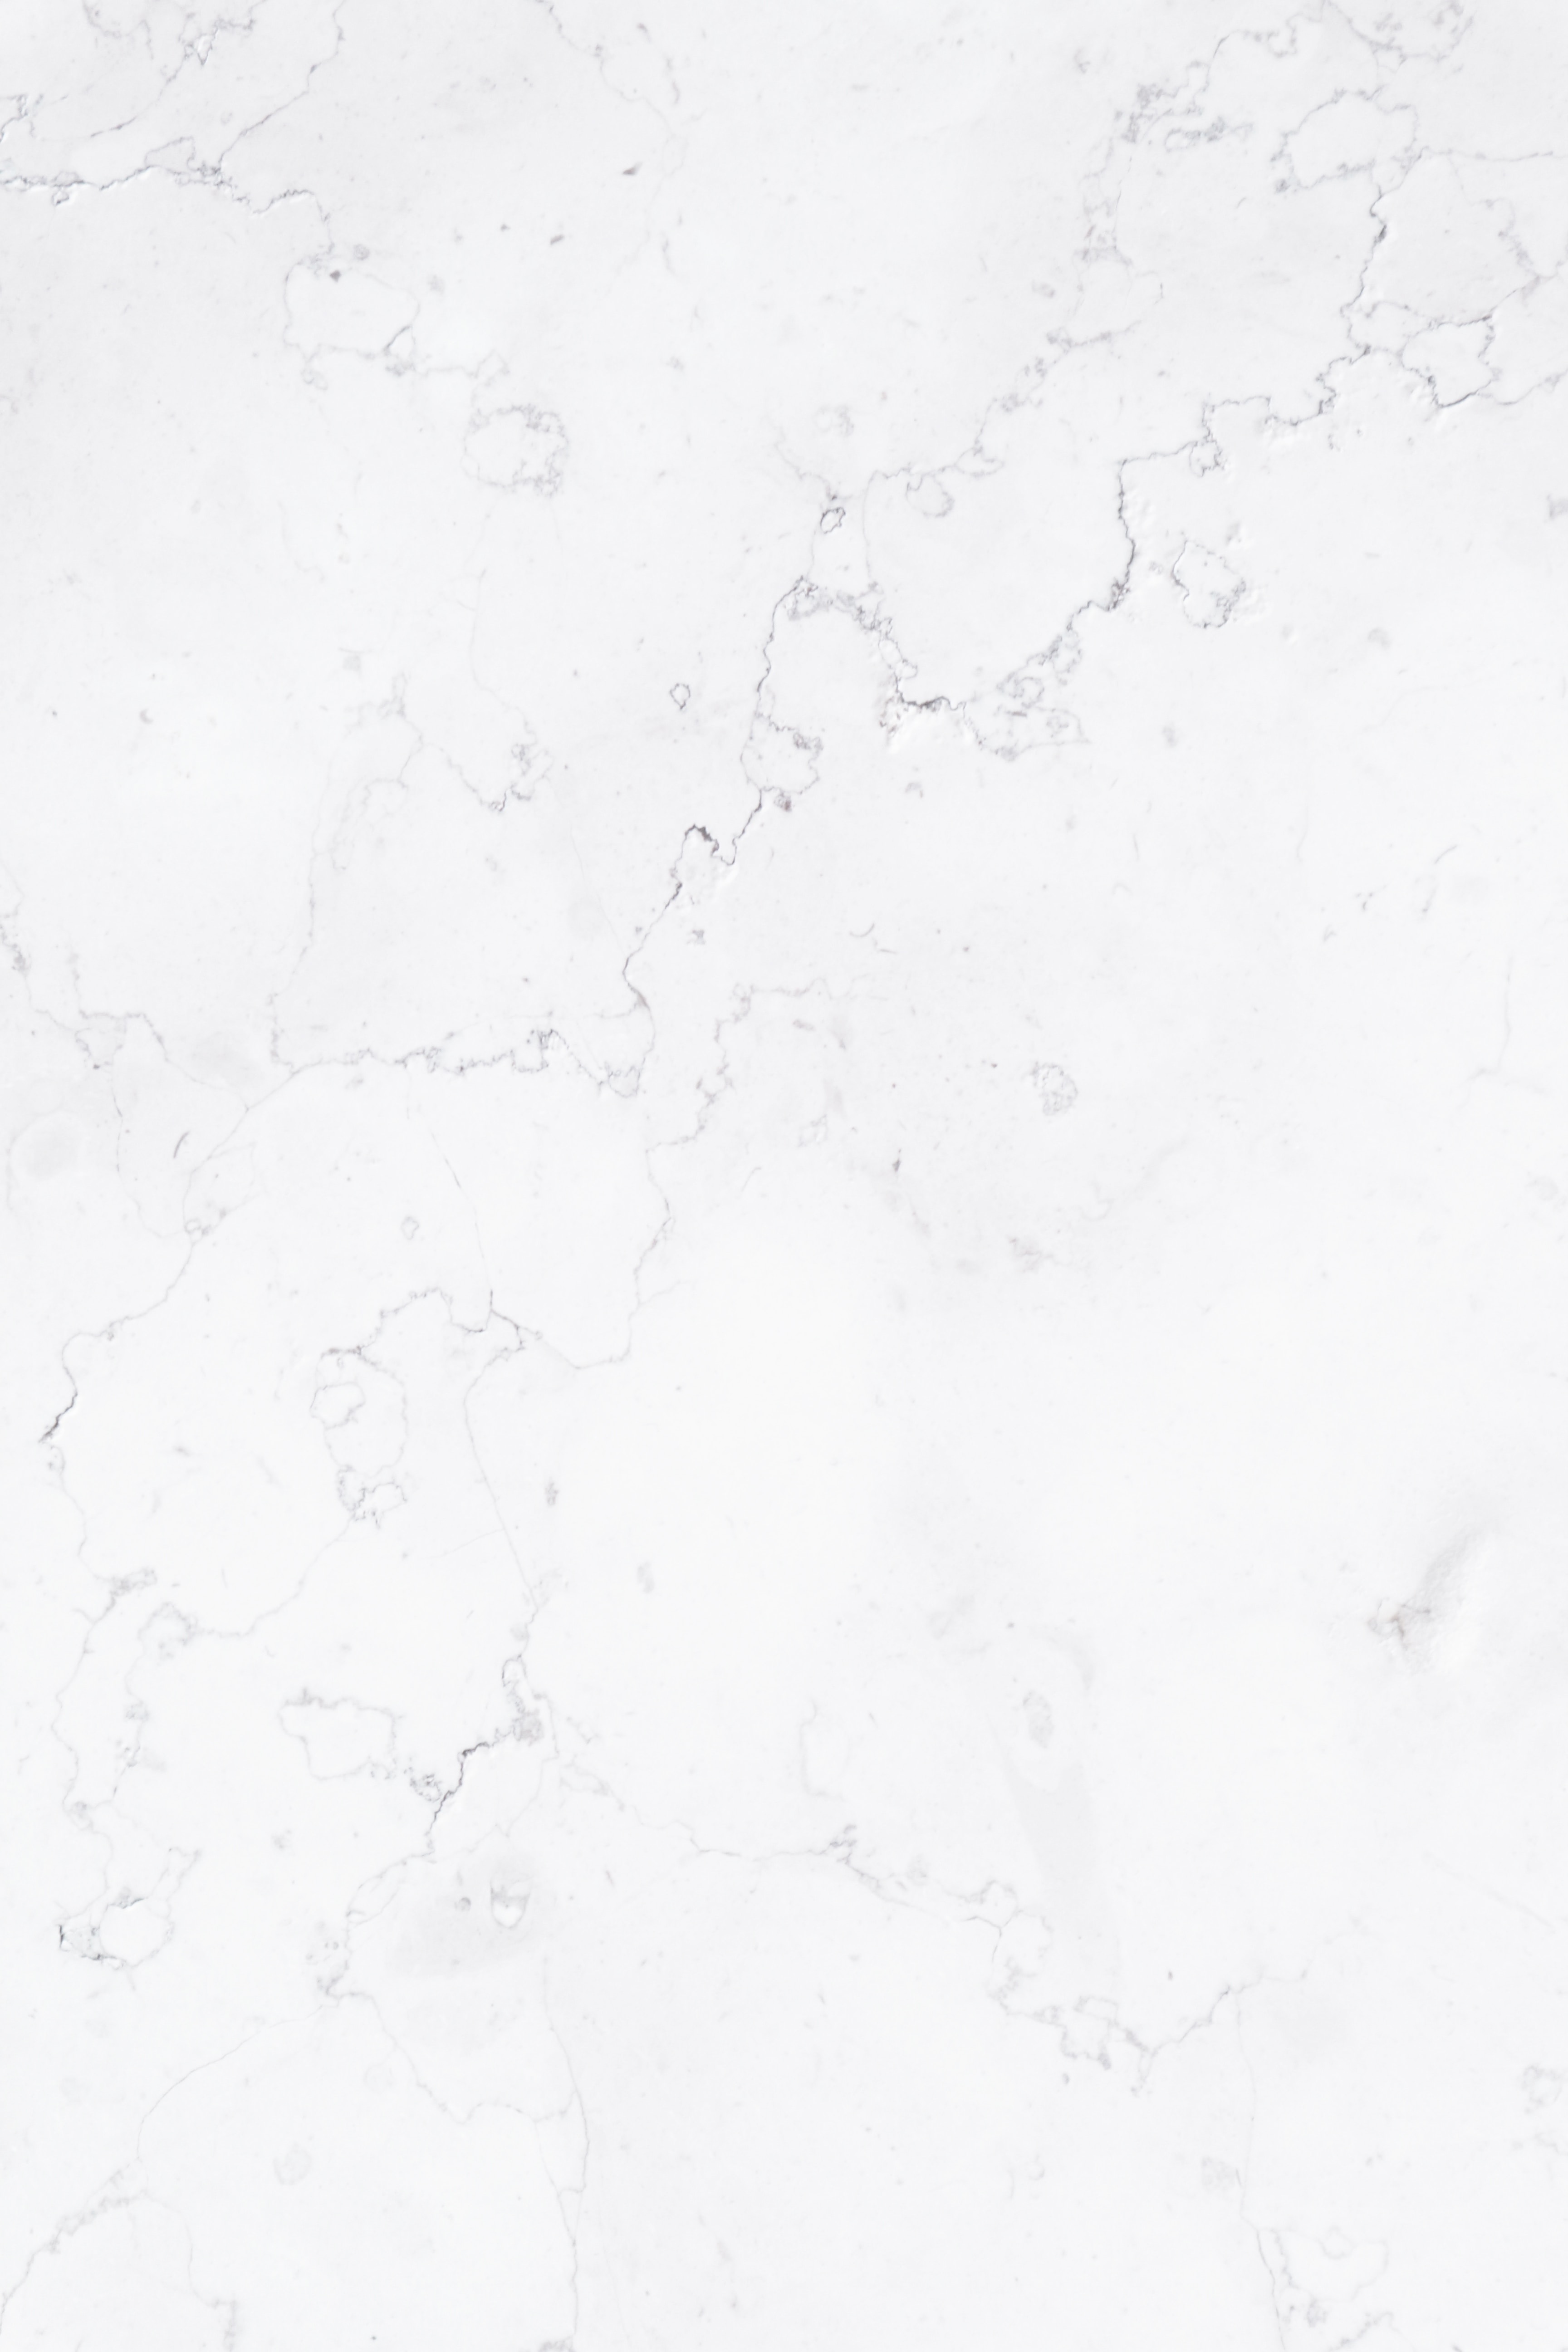 QHD wallpaper marble, white, textures